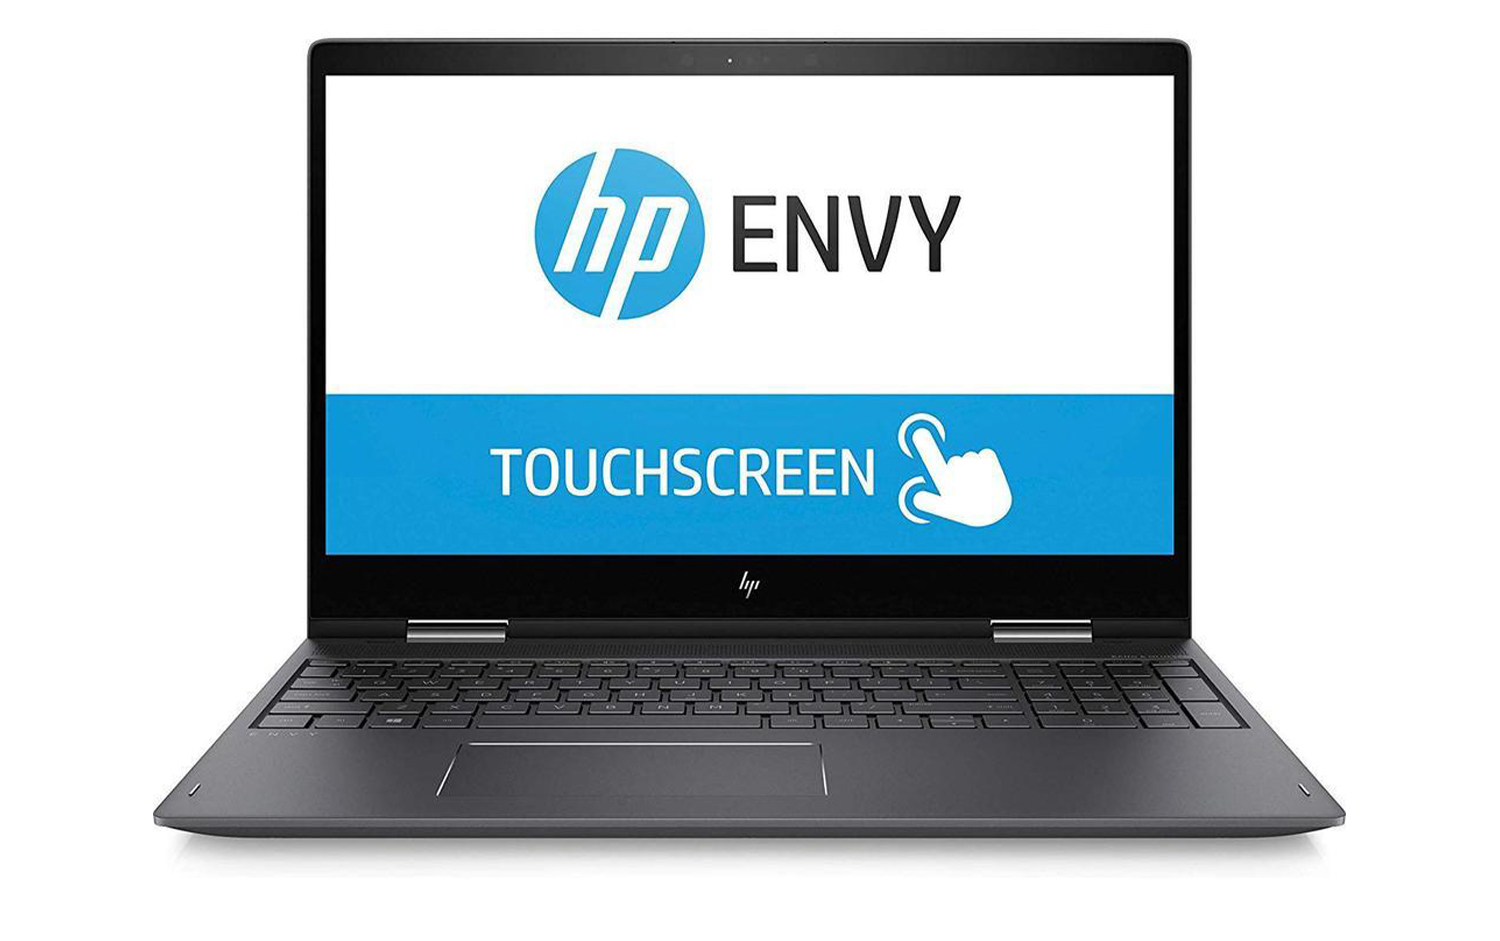 HP Envy x360 15m AMD Ryzen 5 8GB RAM 256GB SSD Touchscreen Windows 10 Home